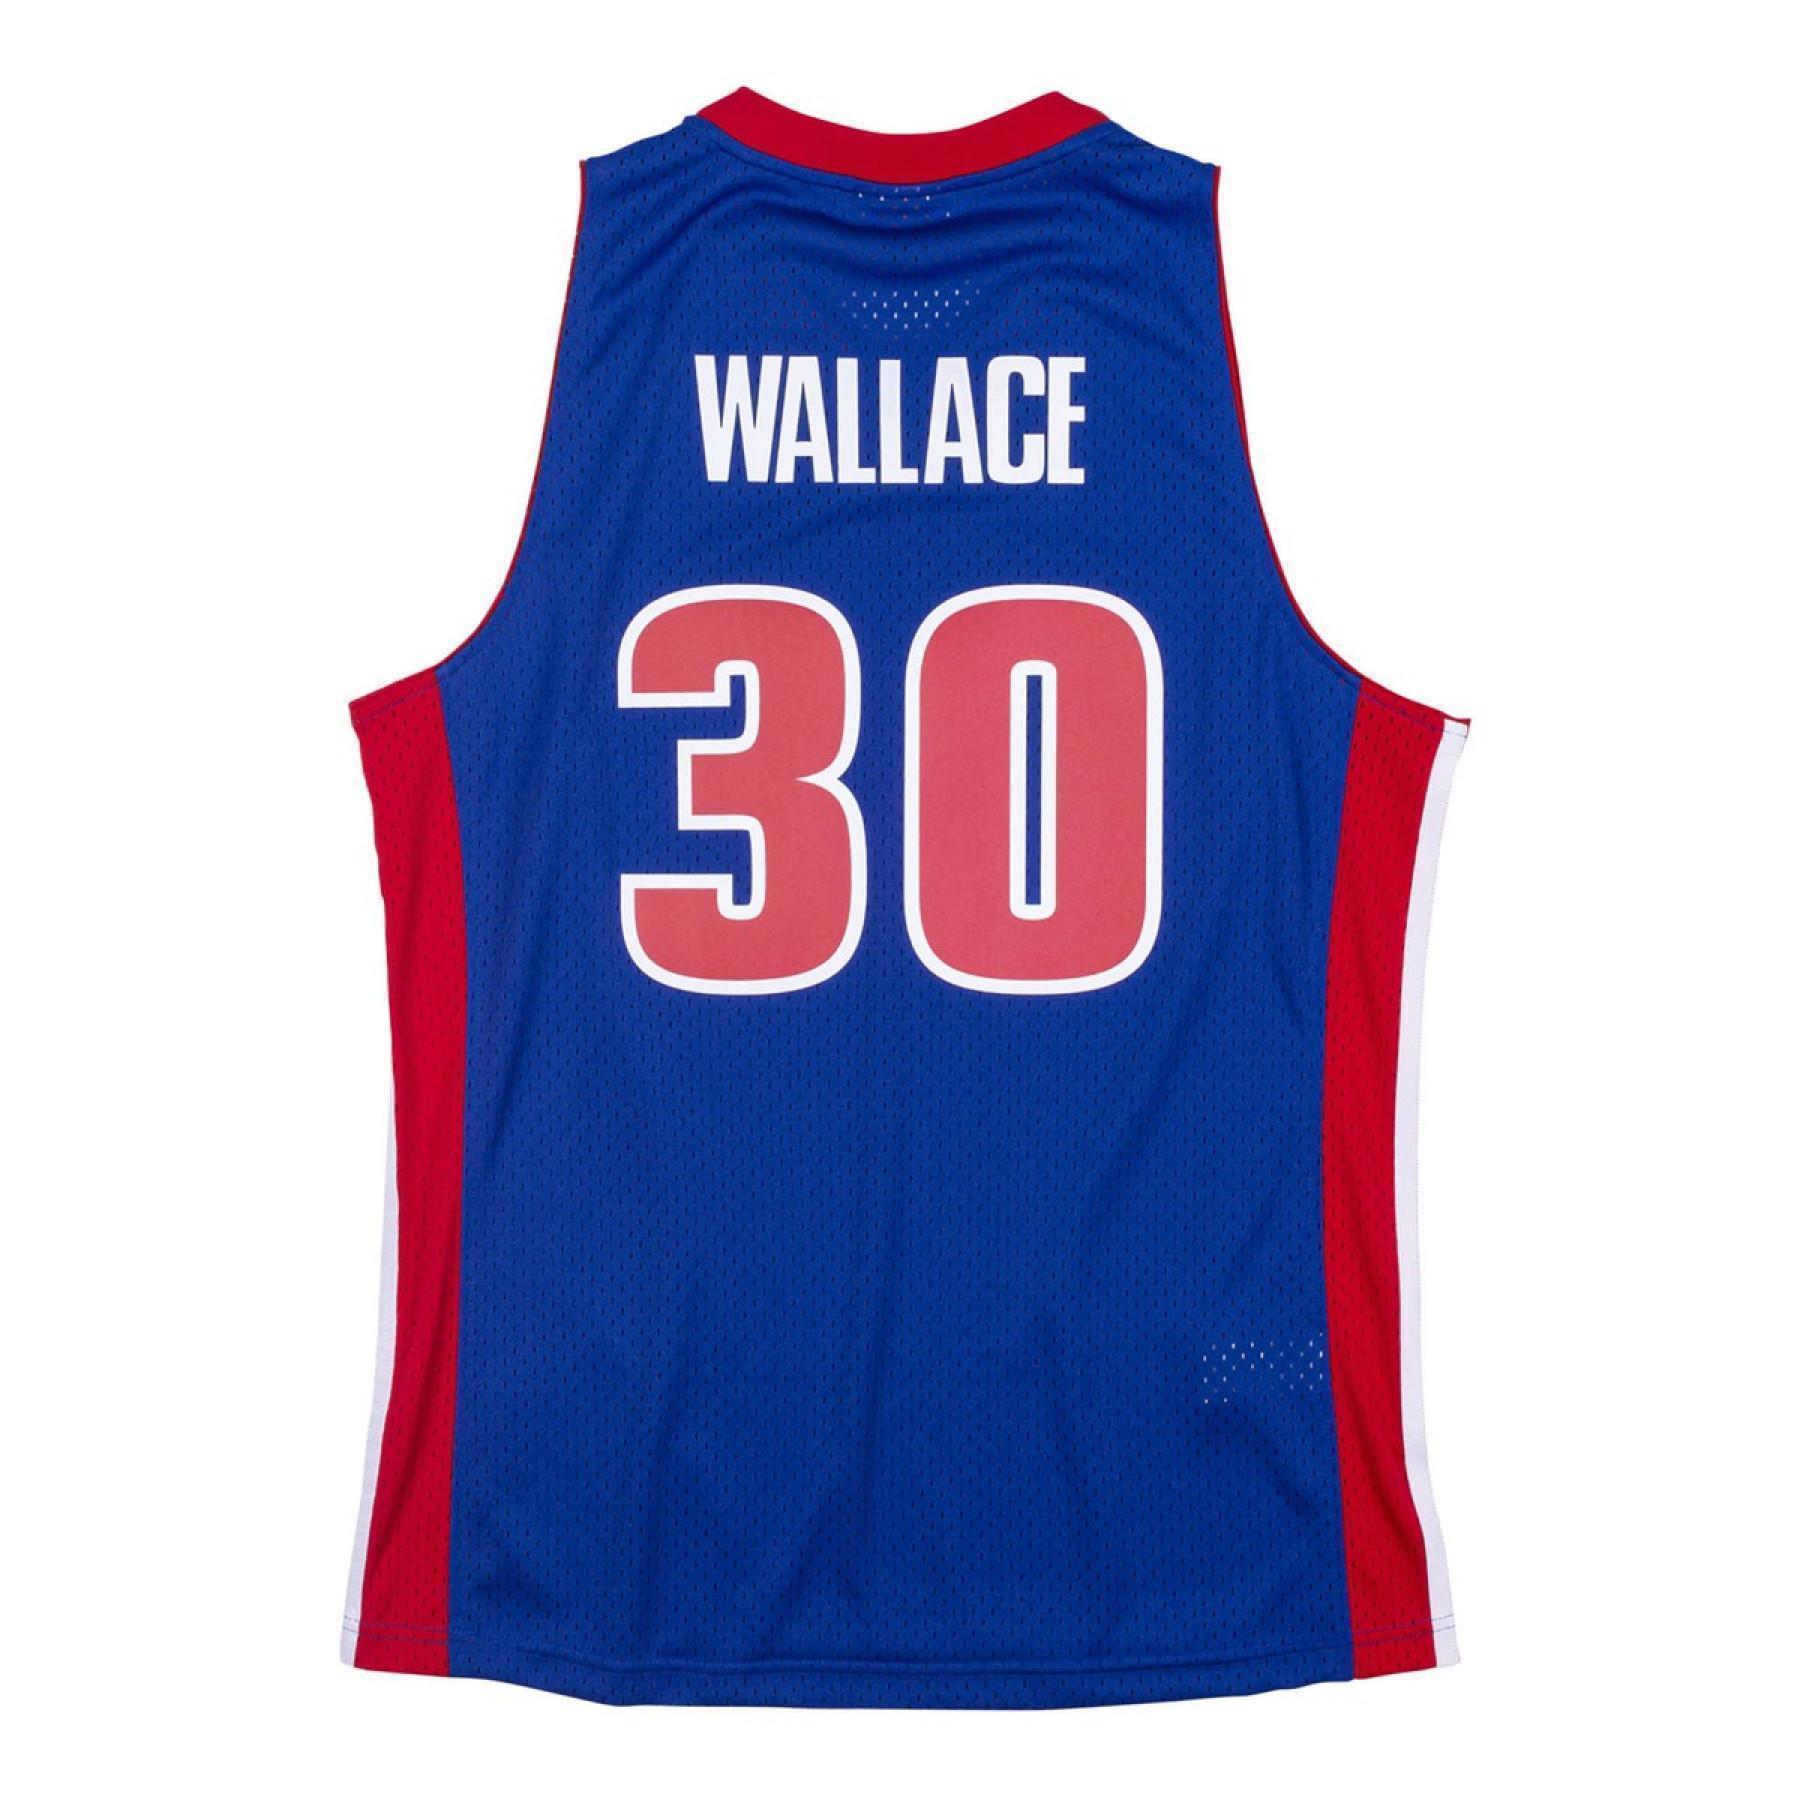 Camisola Detroit Pistons Rasheed Wallace 2003/04